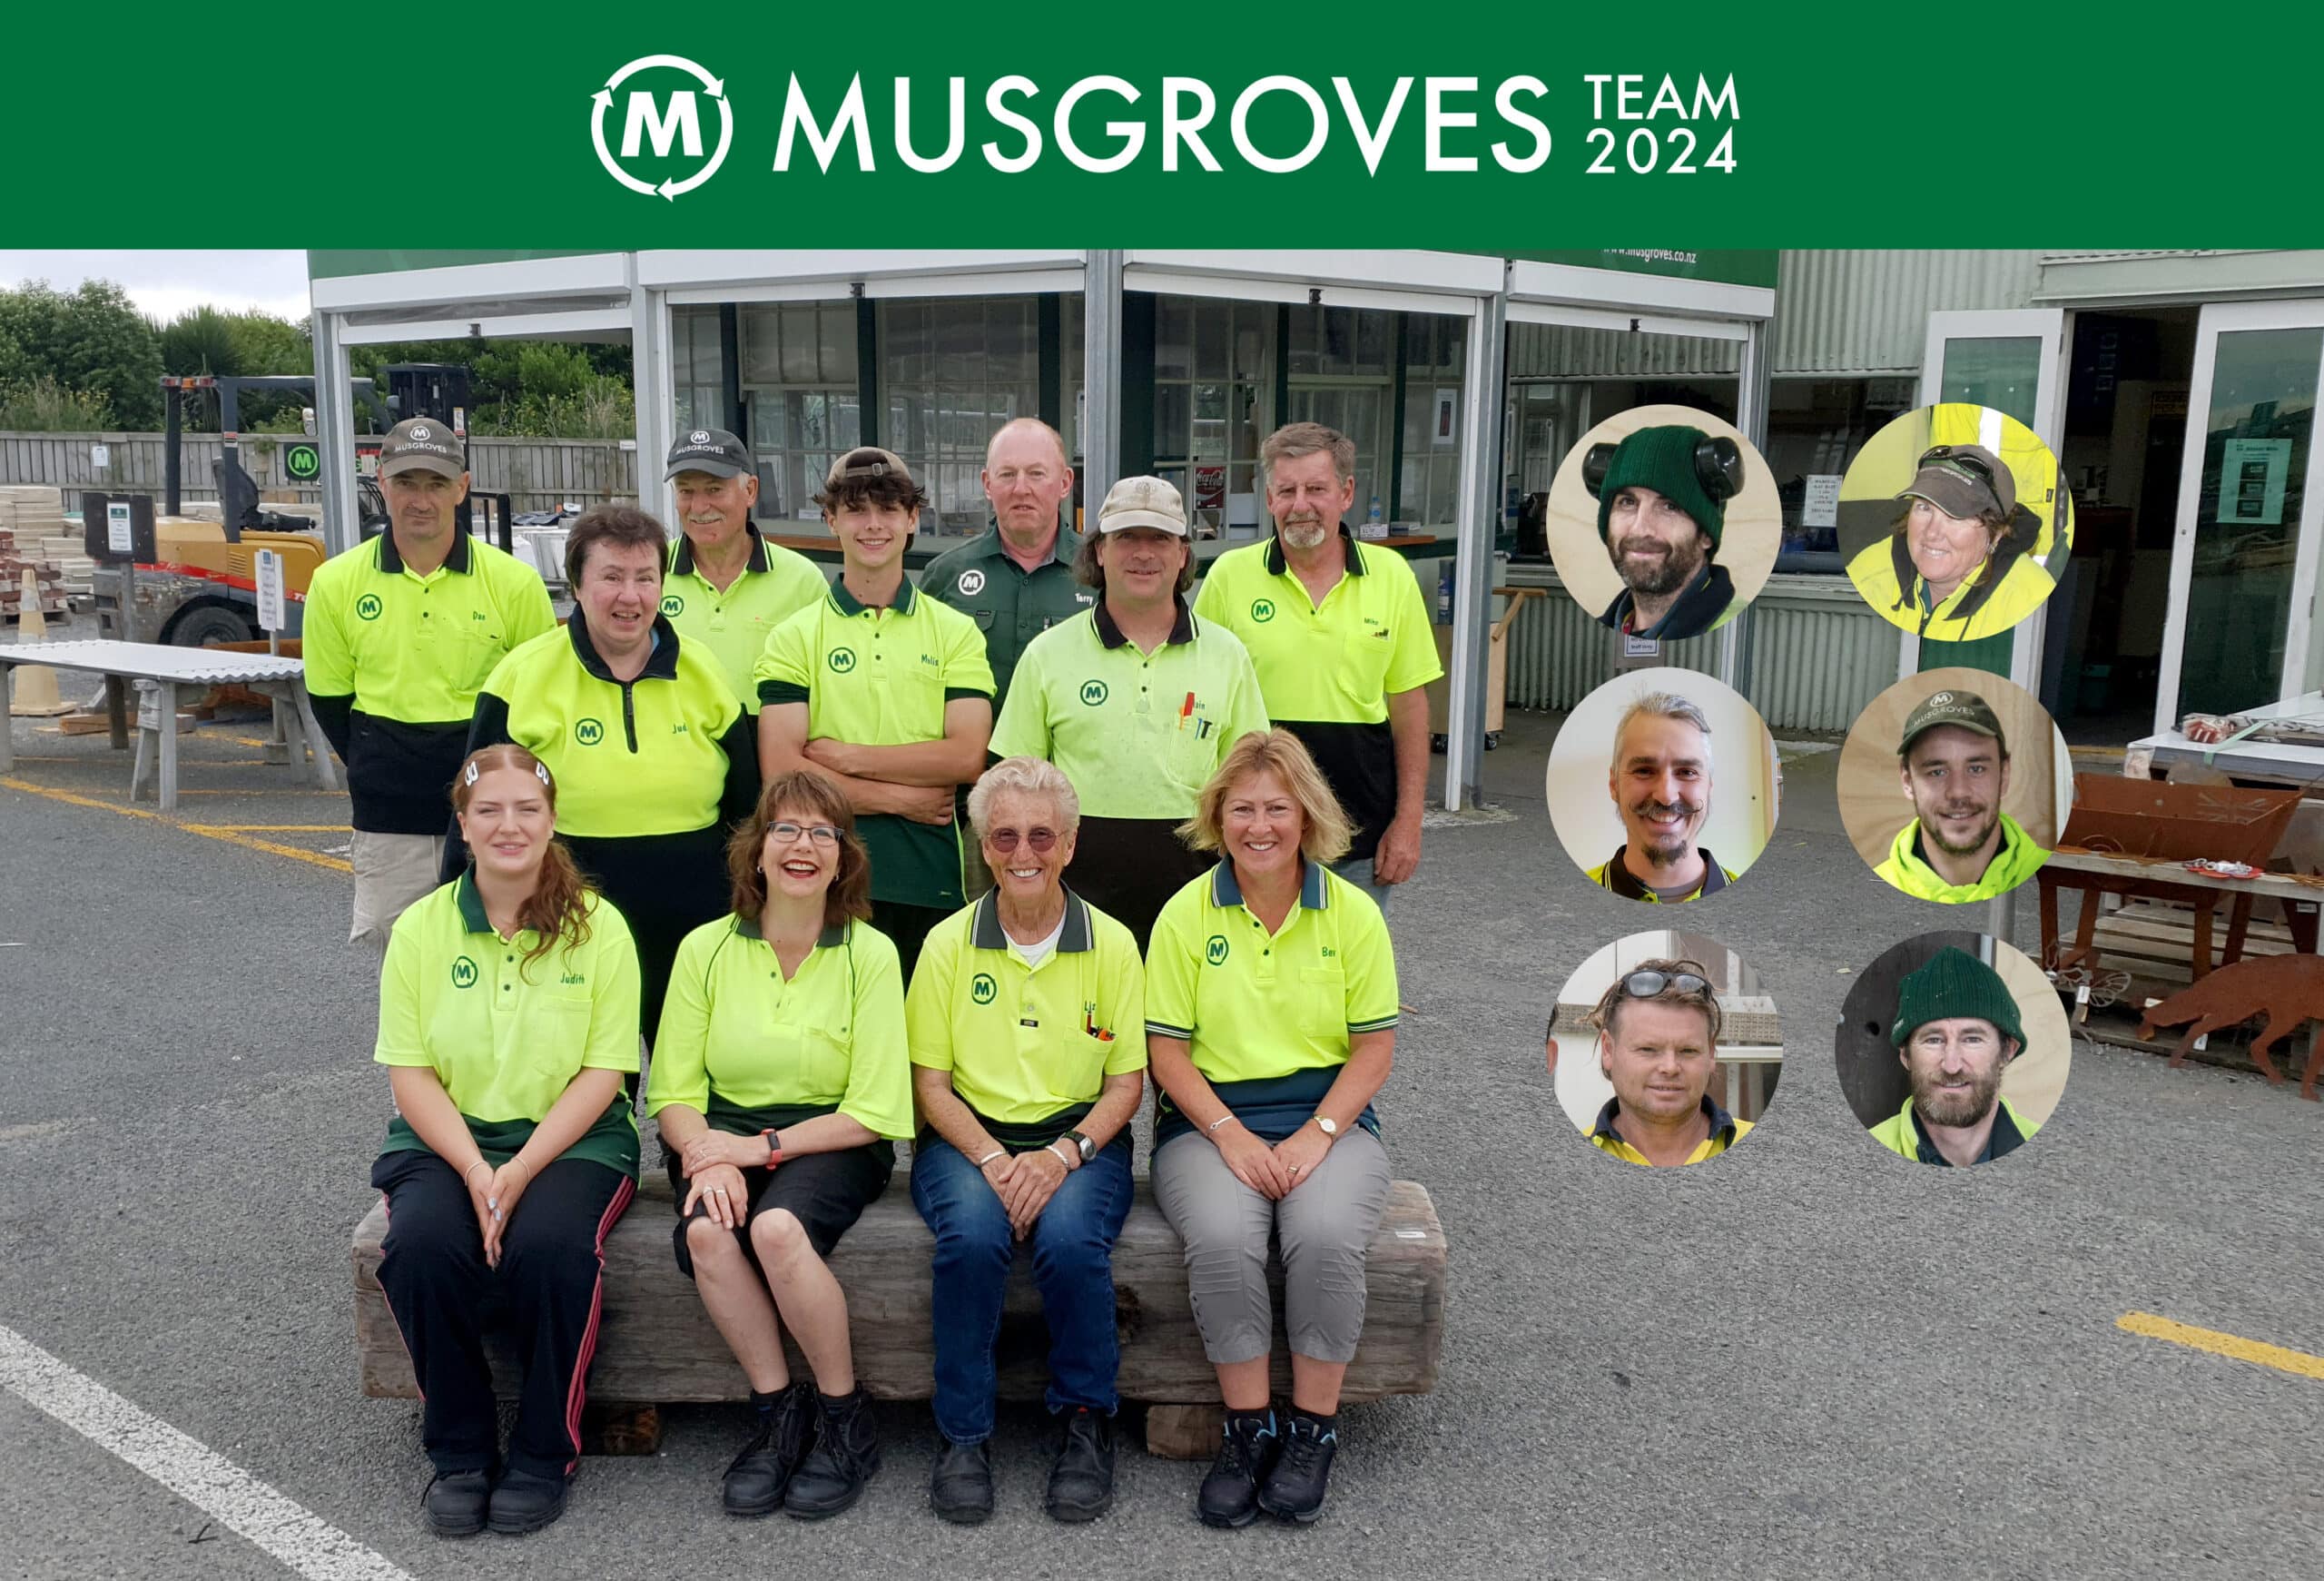 Musgroves Staff Photo - 2024 Team